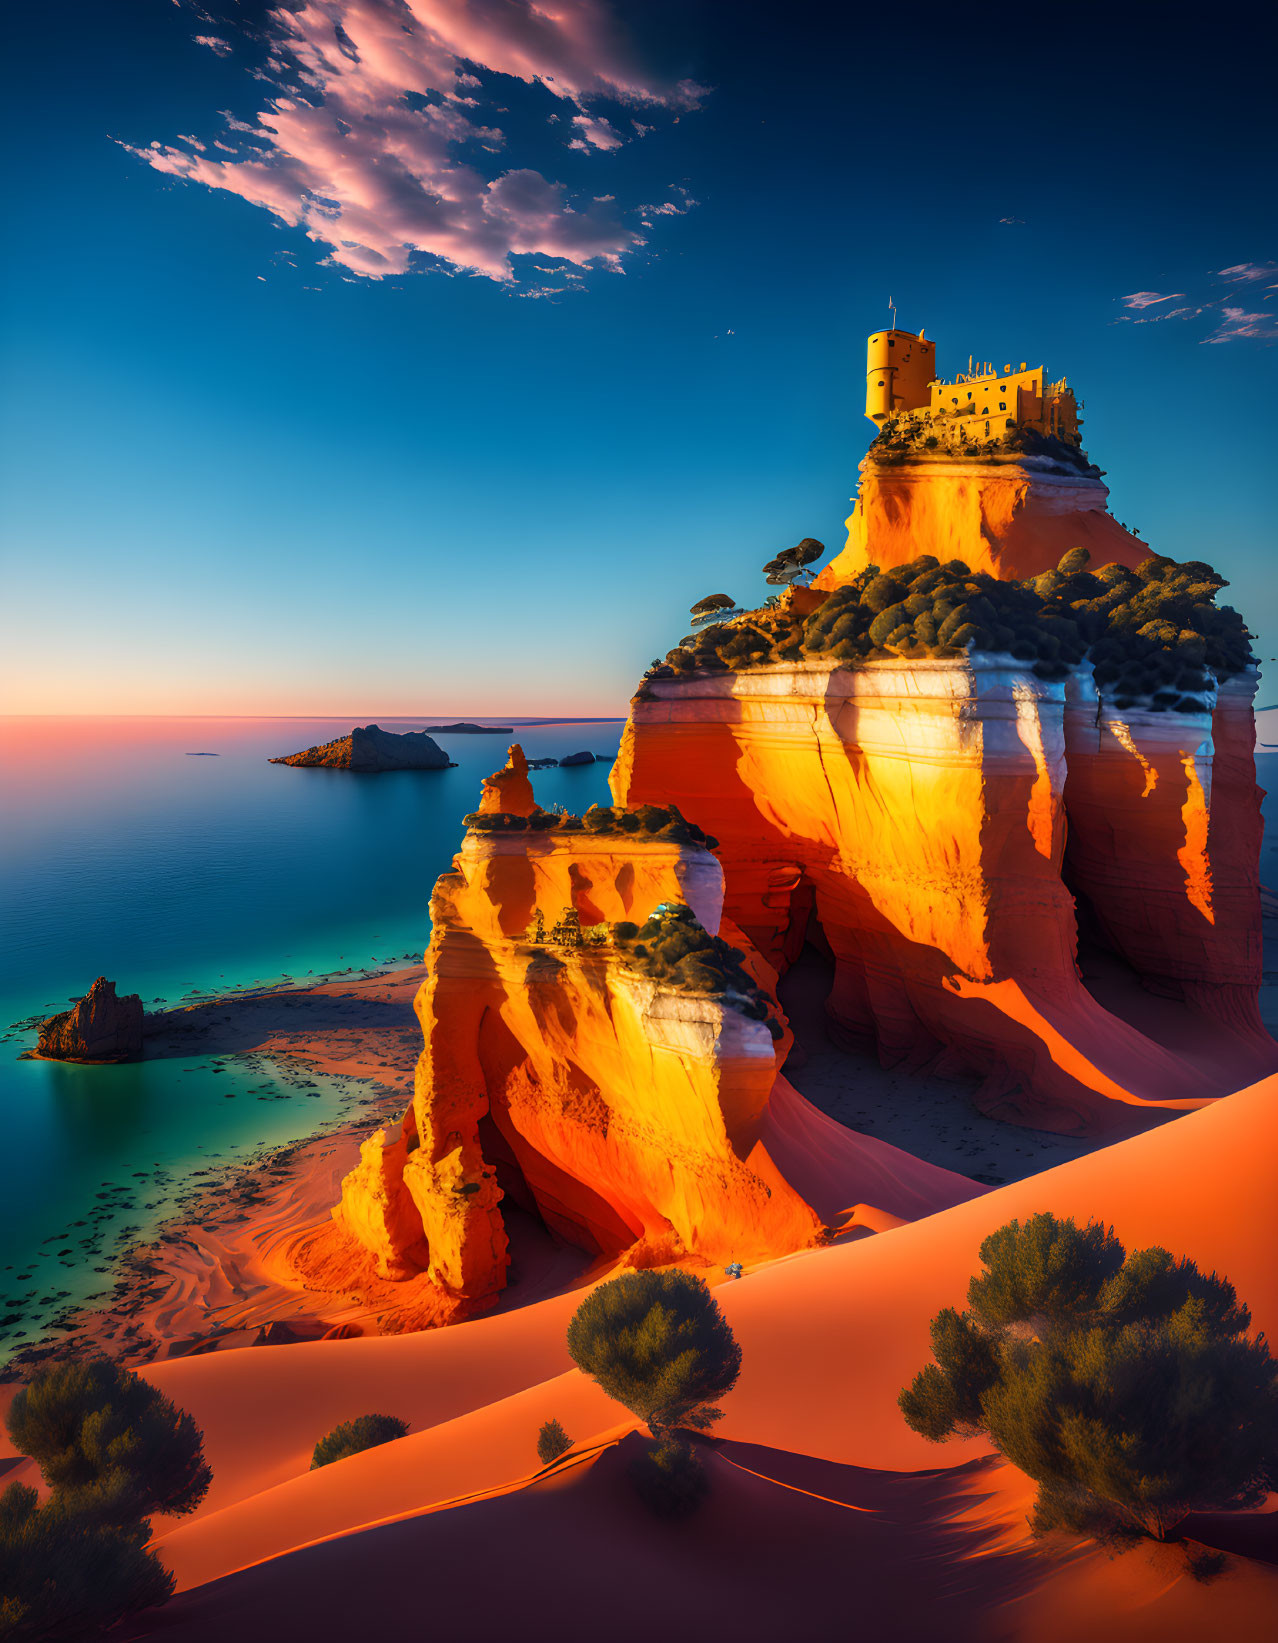 Coastal scene with castle on cliff, sea, orange sands, greenery, blue sky